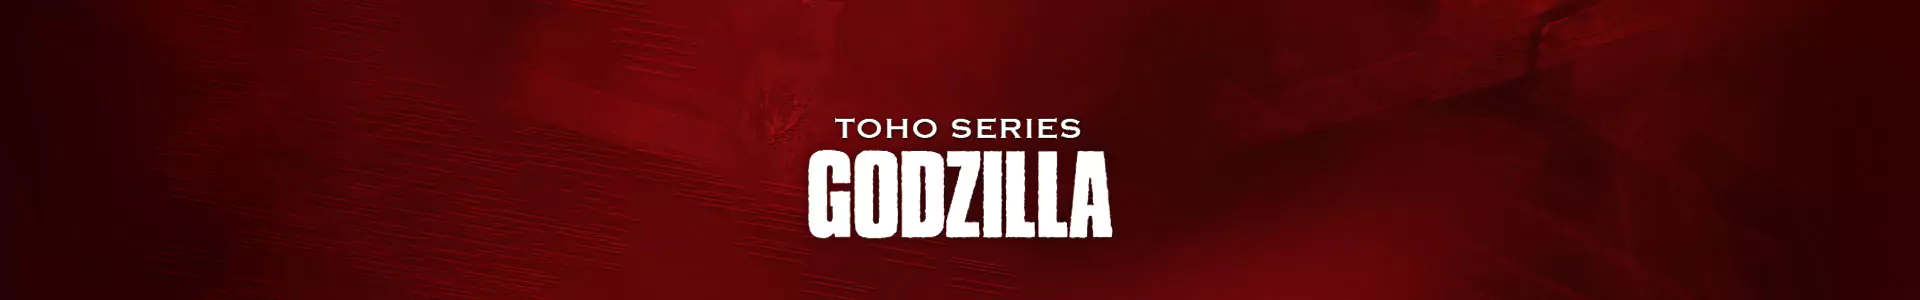 Godzilla header